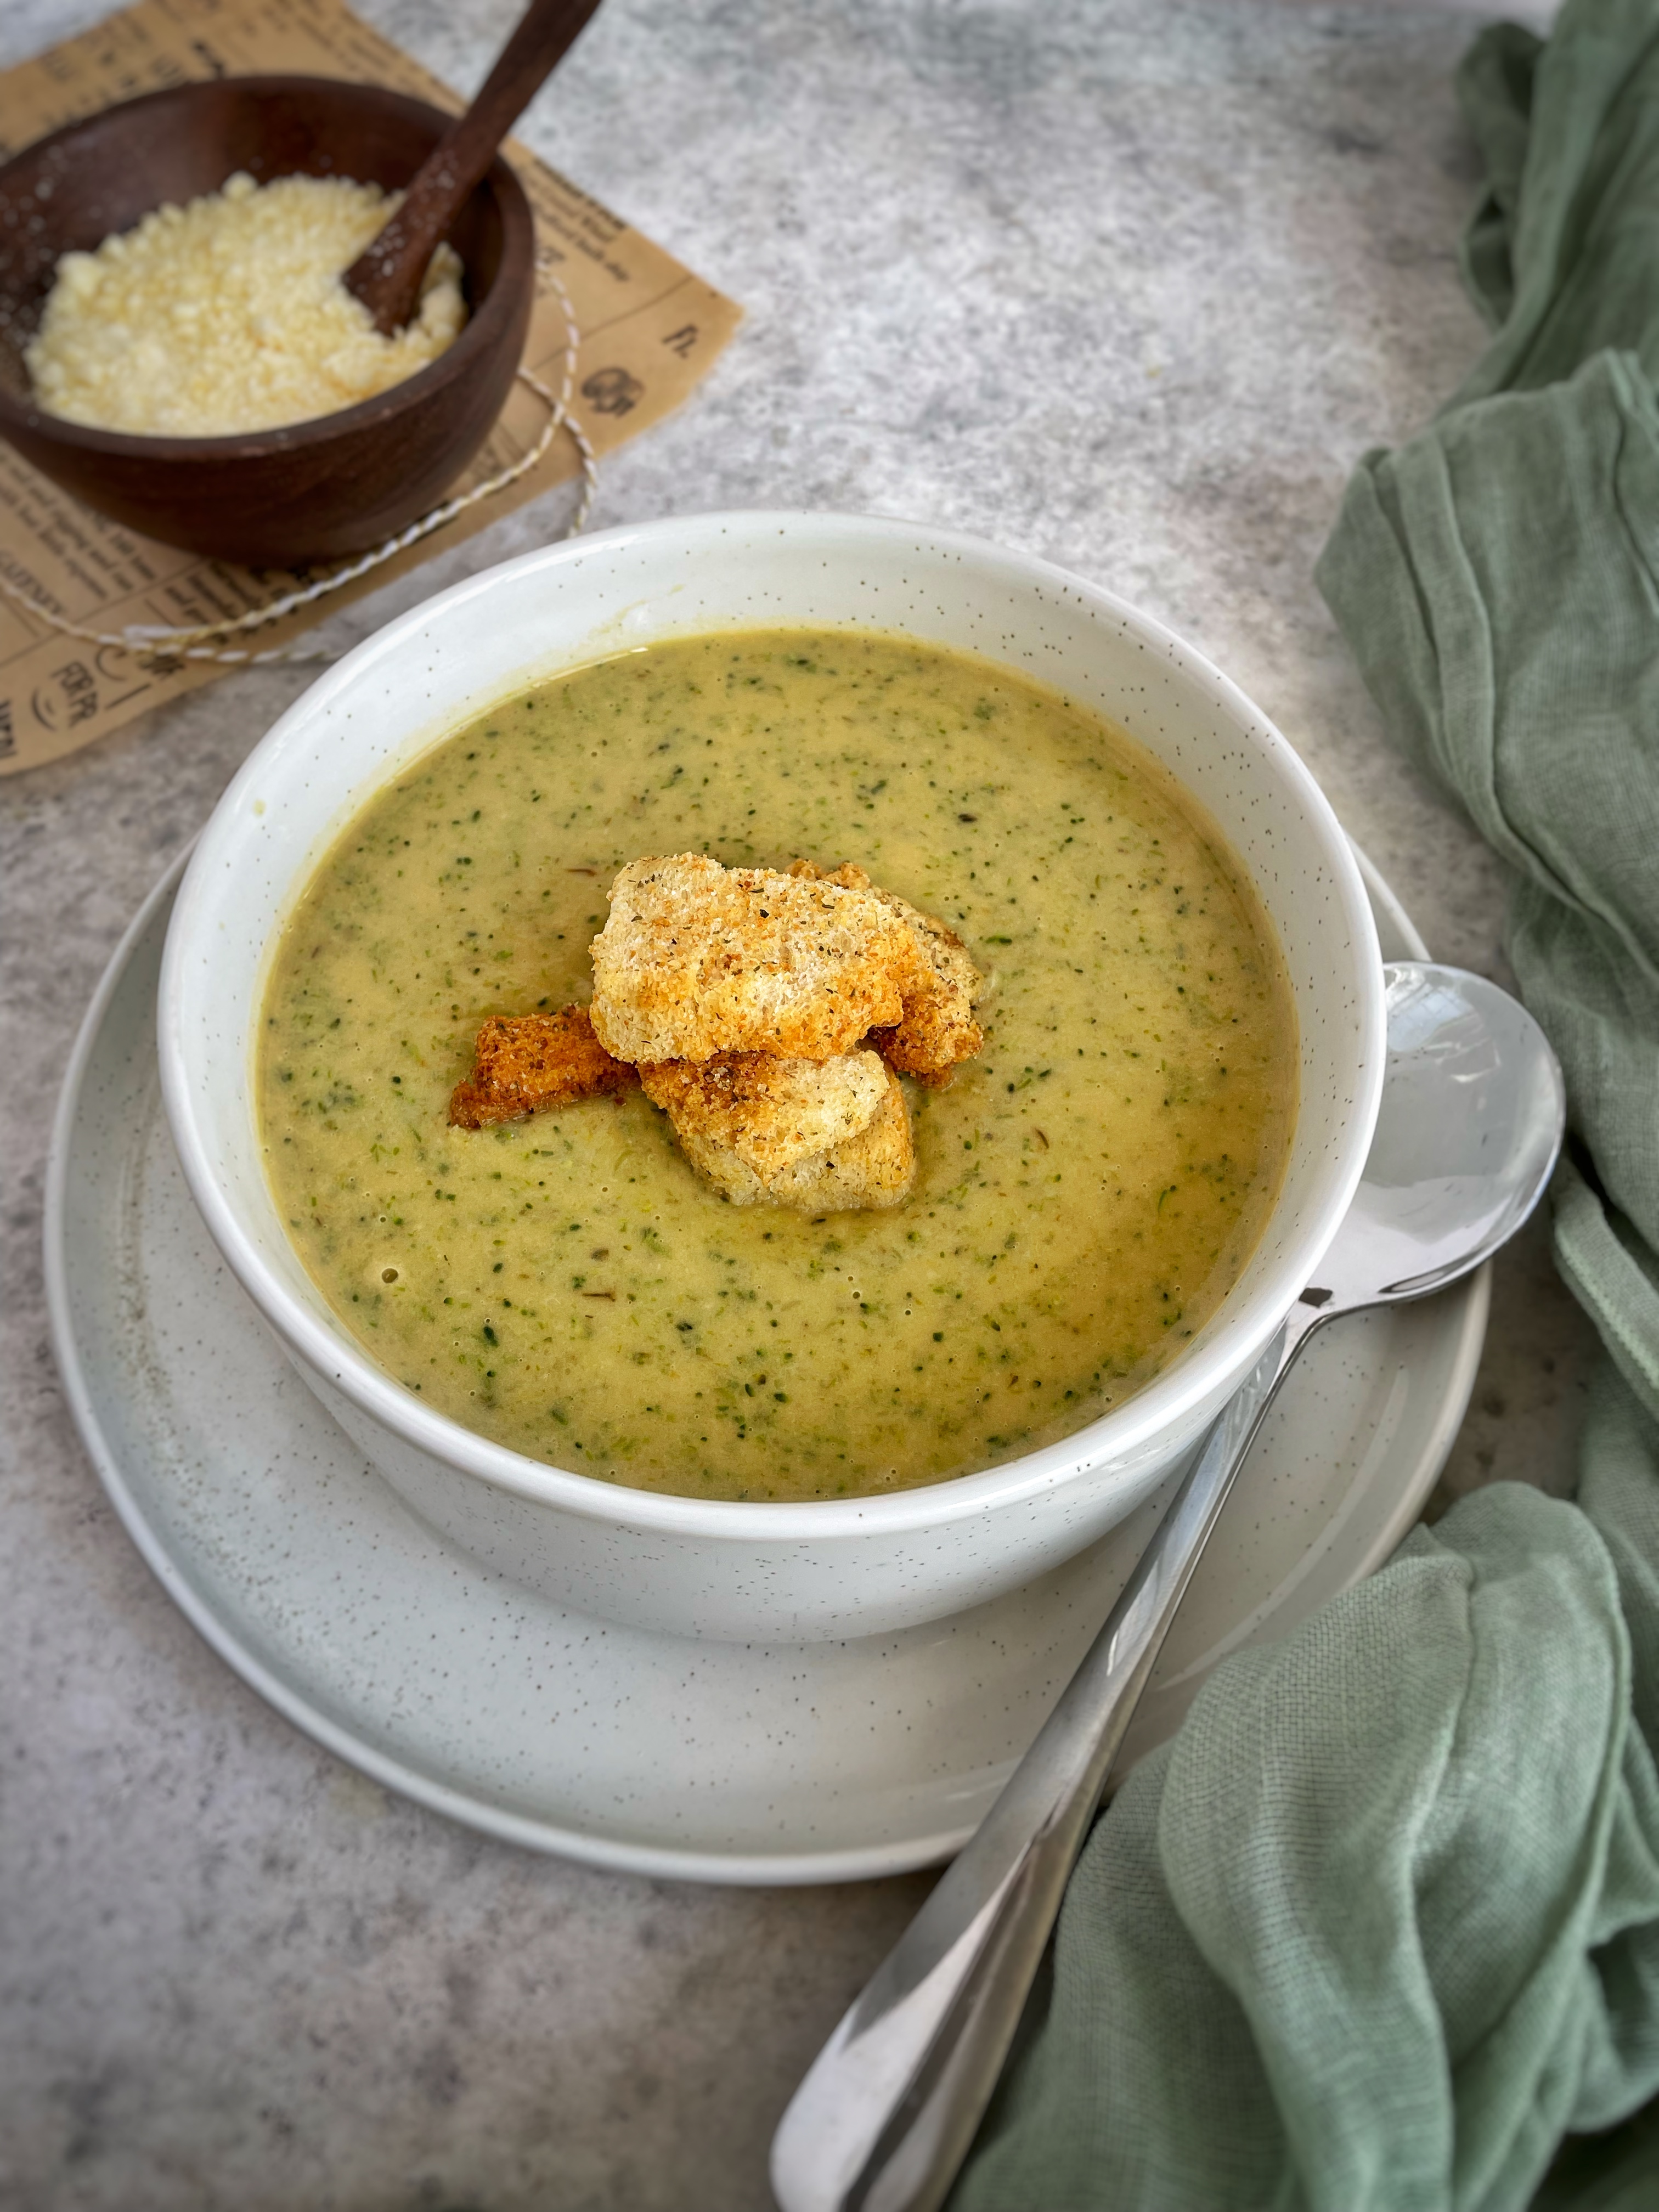 Creamy Vegan Broccoli Cheddar Soup